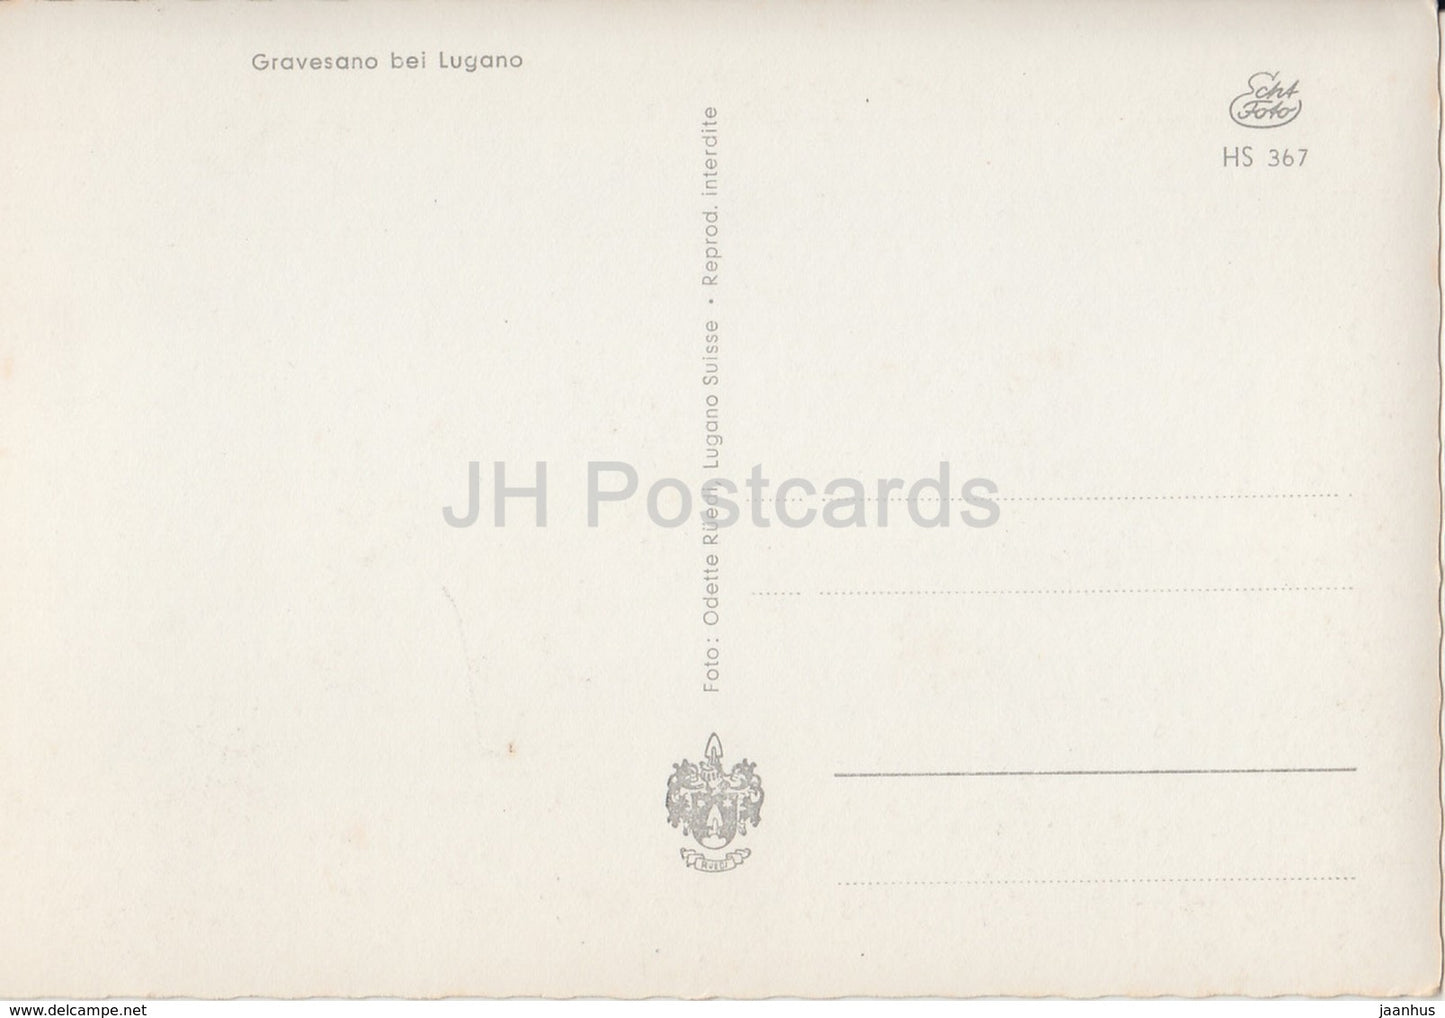 Gravesano bei Lugano - multiview - Switzerland - old postcard - unused